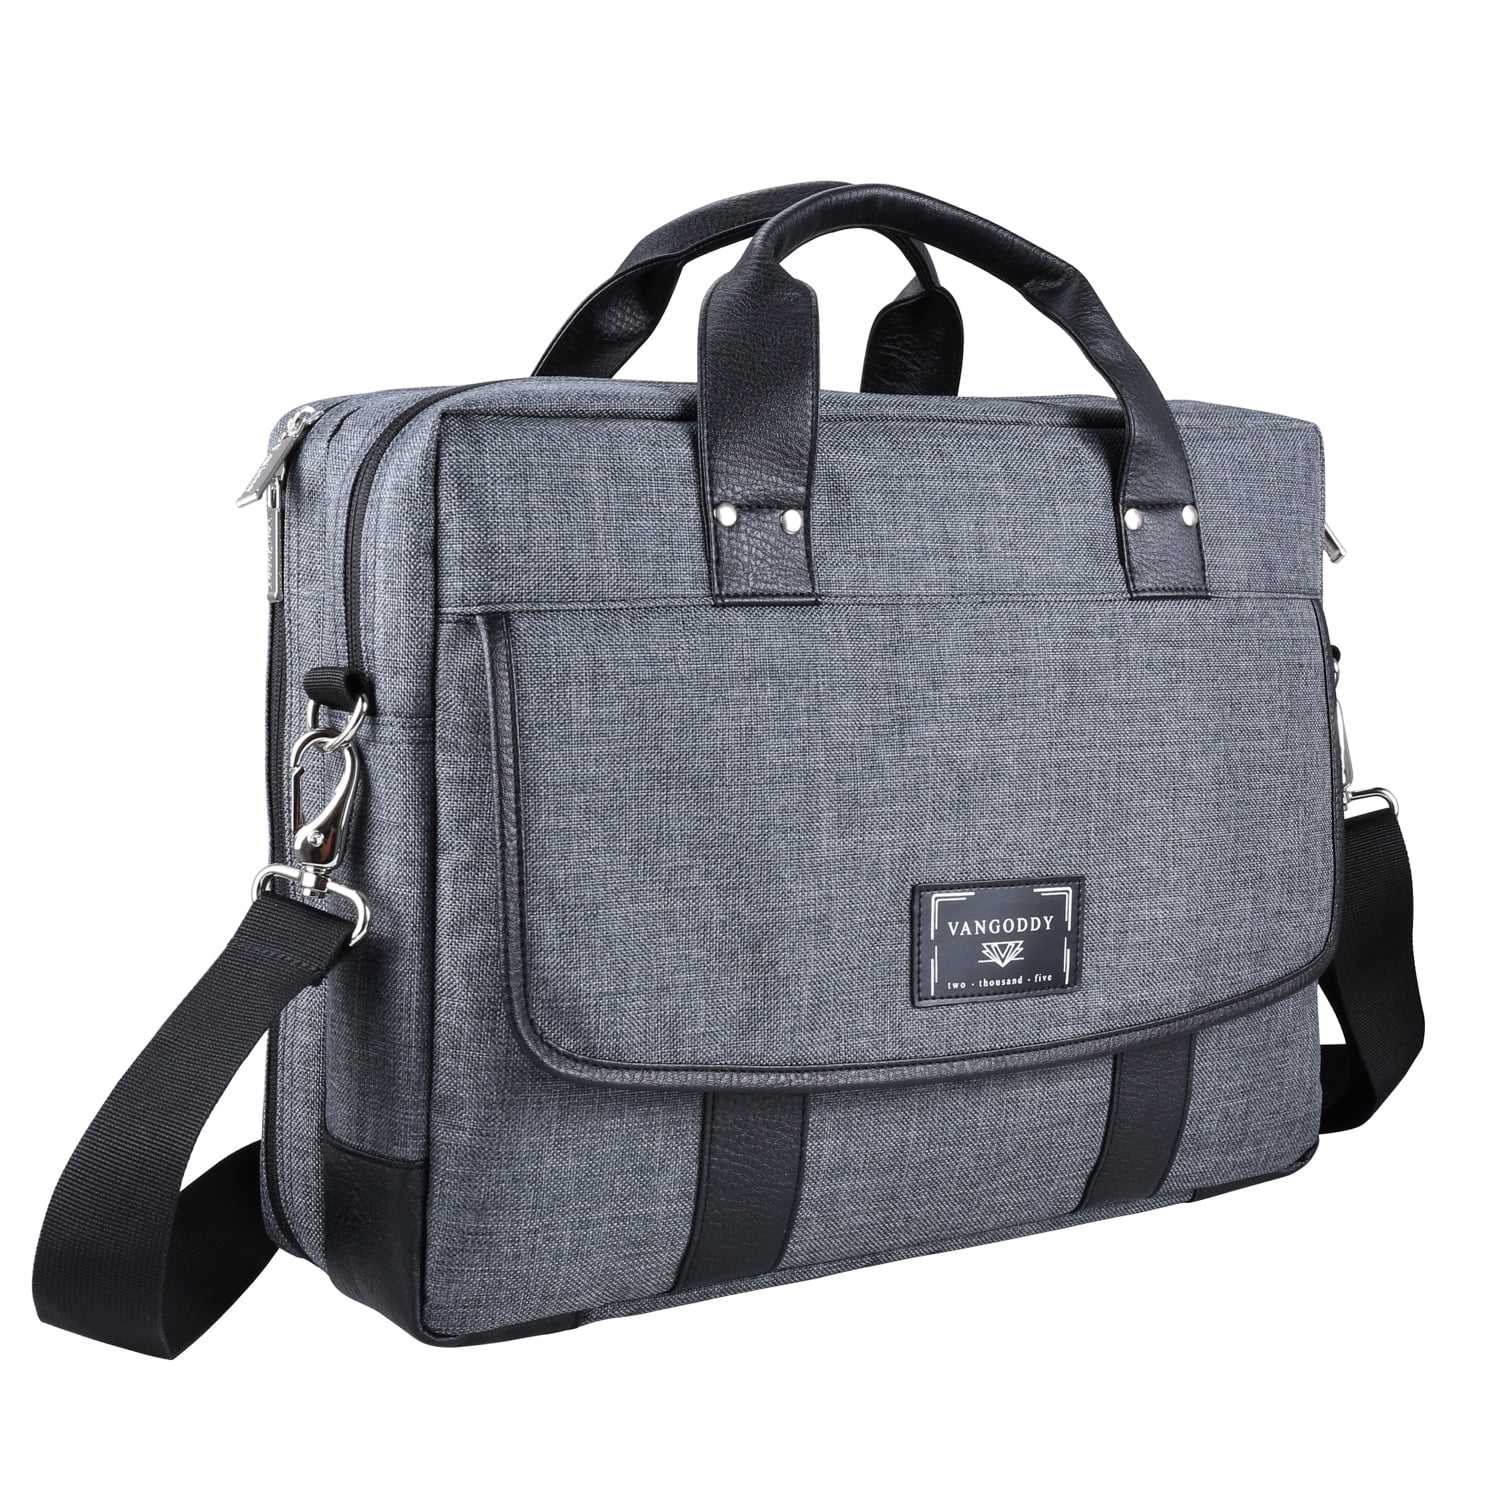 DOMISO 17 inch Laptop Sleeve Shoulder Bag Water-Resistant Messenger Bag Business Briefcase for 17.3 Notebooks/17.3 Dell Inspiron/MSI GS73VR Stealth Pro/Lenovo IdeaPad/HP Envy/LG Gram/ASUS ROG,Blue